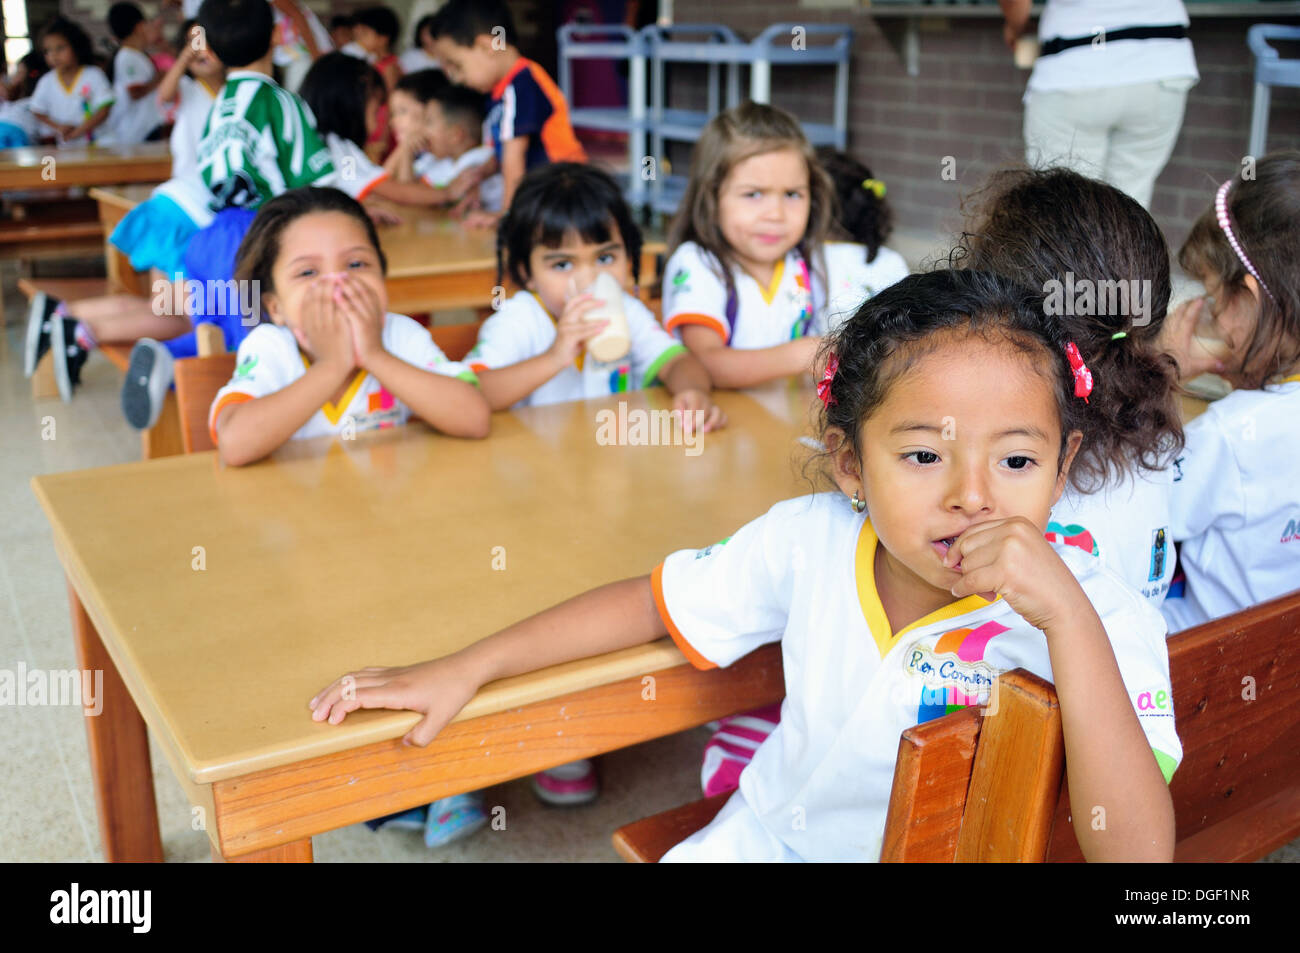 kindergarten Buen Comienzo - MORAVIA district in MEDELLIN .Department of Antioquia. COLOMBIA Stock Photo